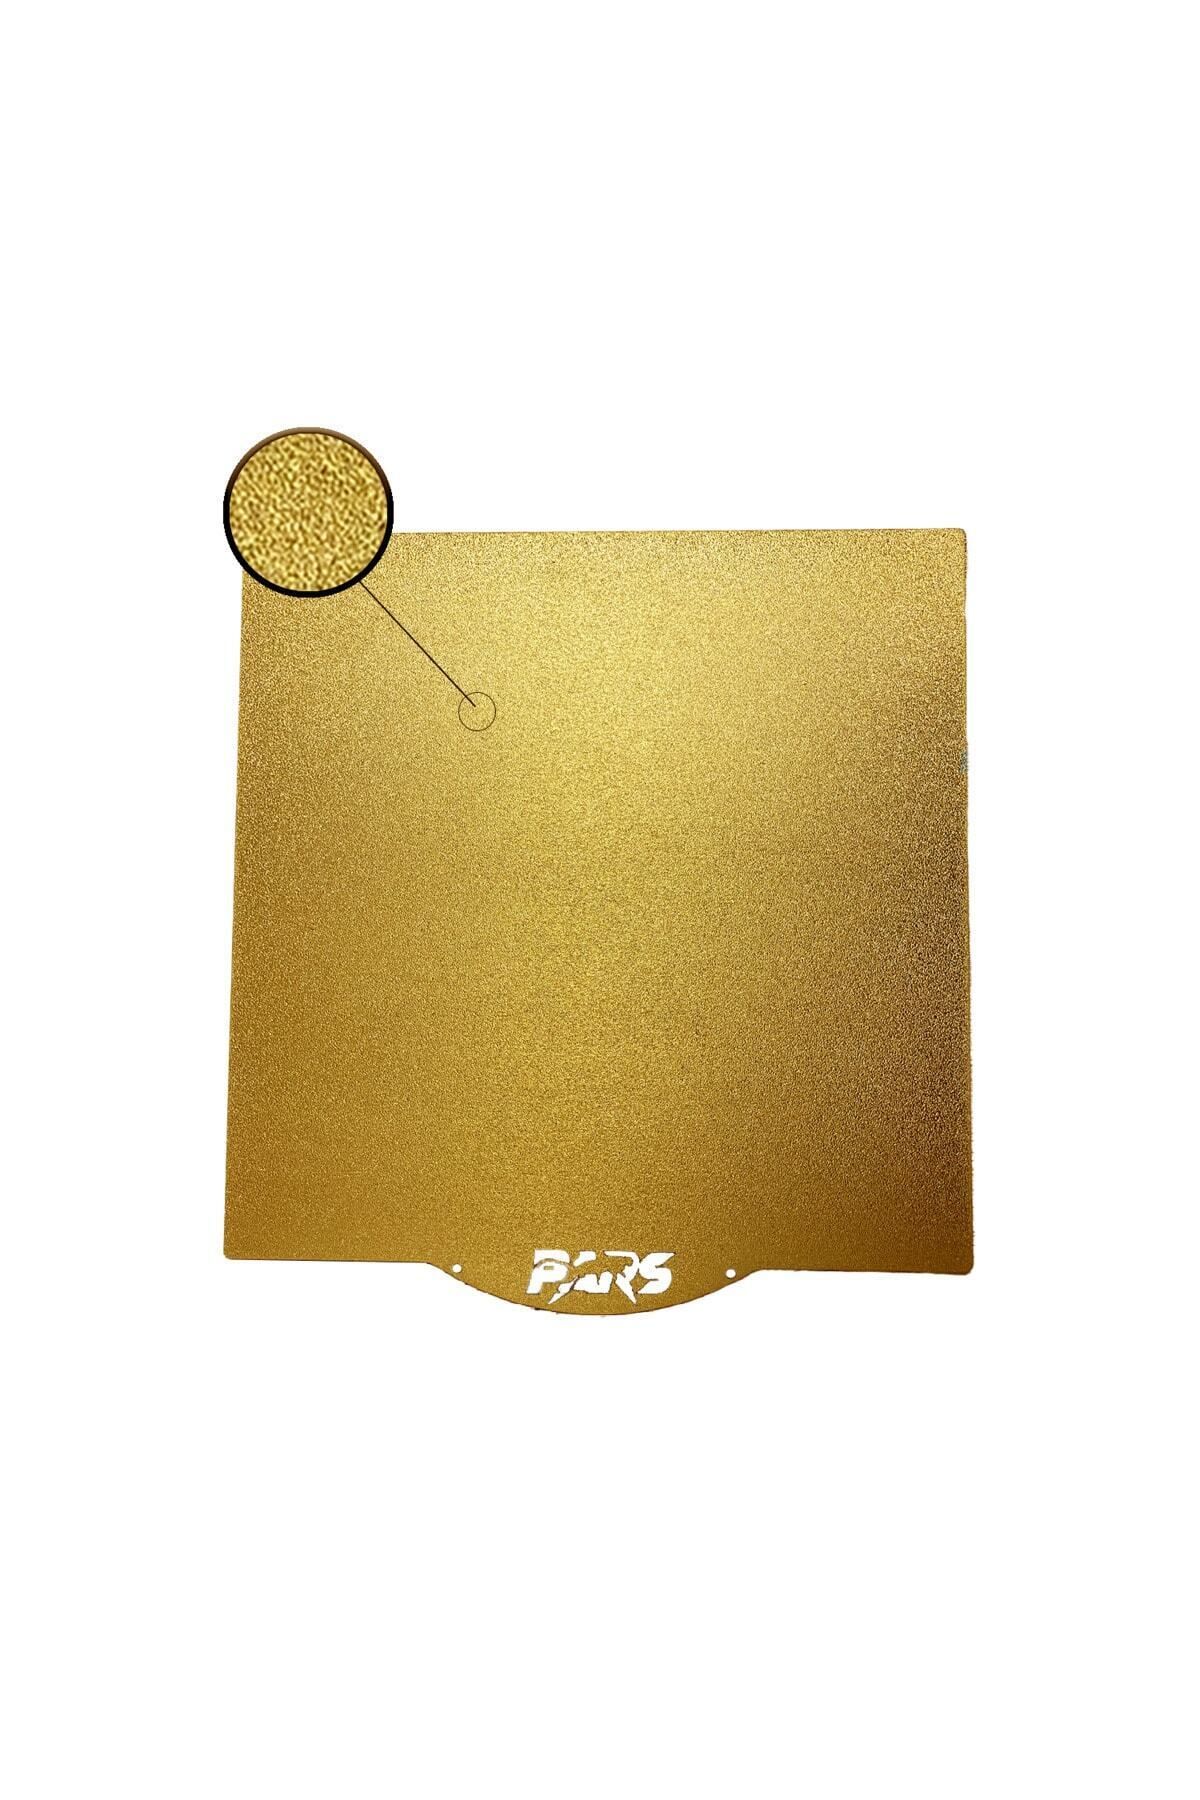 Pars 377x370 Mm Gold Pei Kaplı Özel Yay Çeliği Tabla Magnetsiz